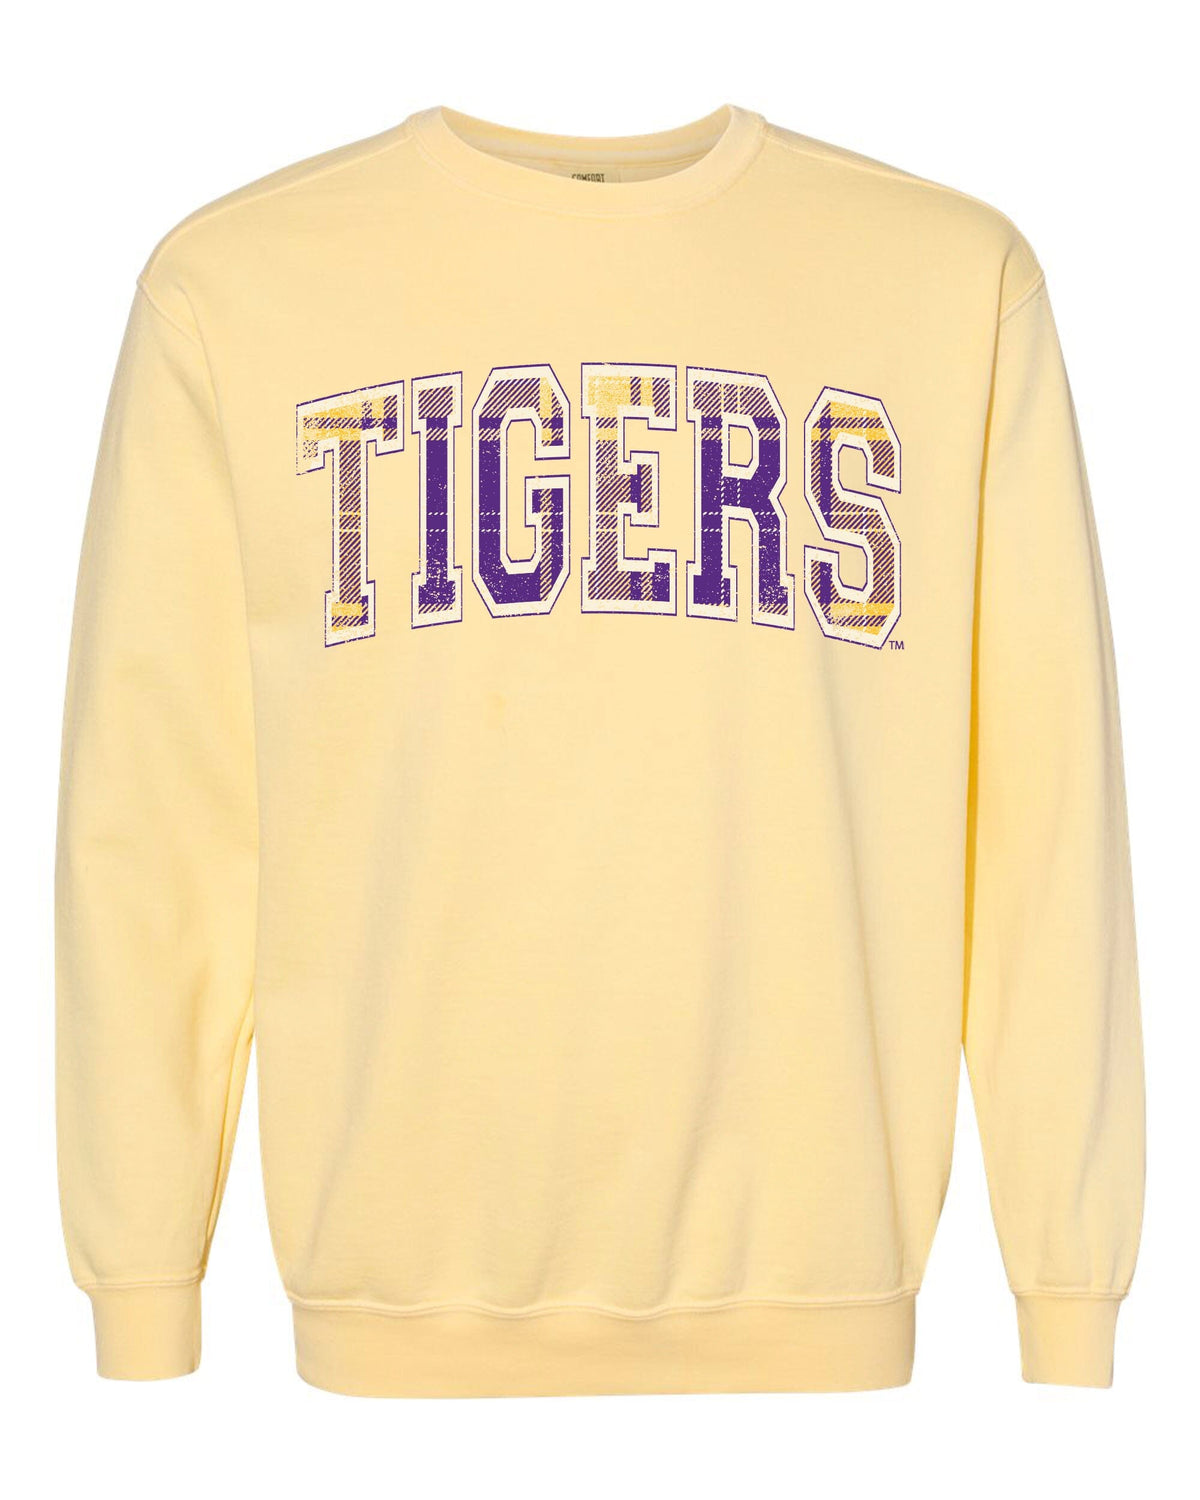 LSU Tigers Tartan Butter Sweatshirt - shoplivylu